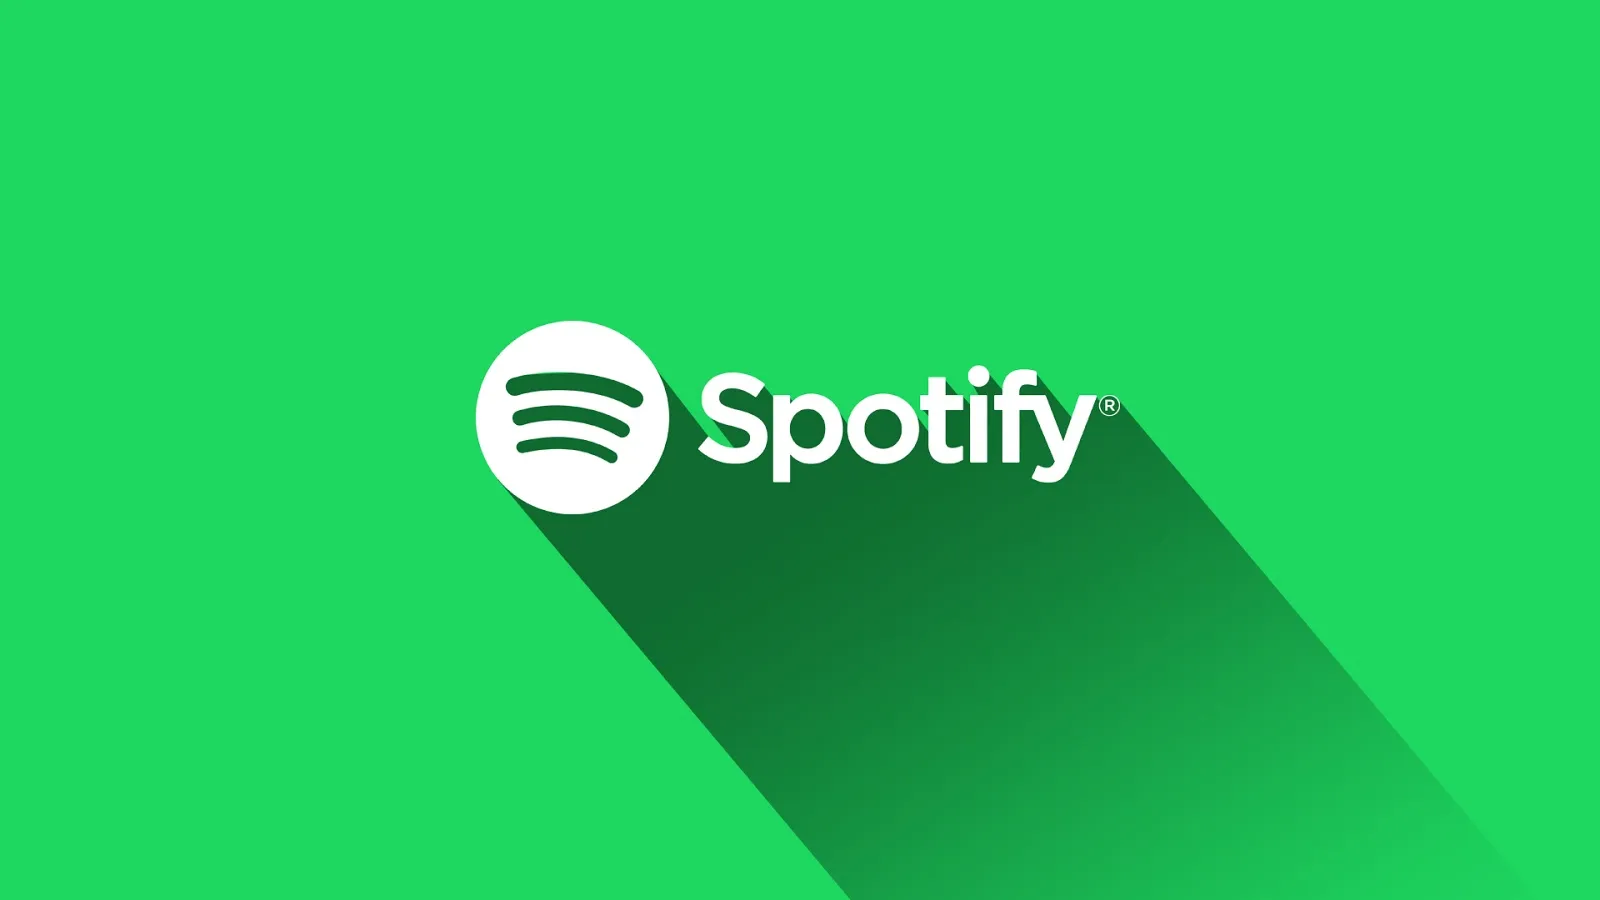 spotify logo computer wallpaper 62369 64312 hd wallpapers | Spotify | Spotify มีแผนปรับราคาแพ็คเกจ Premium เพิ่มขึ้นในสหรัฐอเมริกา